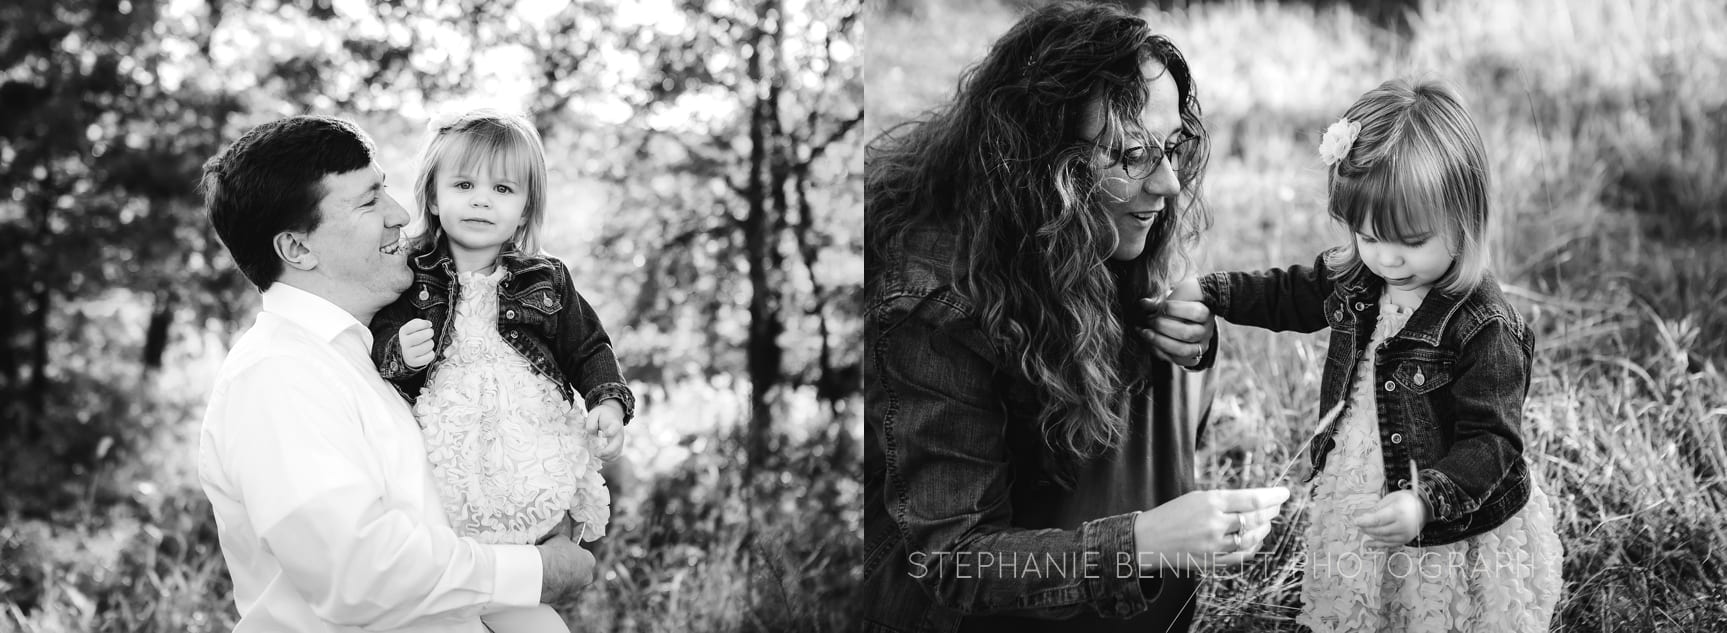 Stephanie Bennett Photography Northfield MN.   Family Photographer Eagan MN | Rosemount MN Family Session